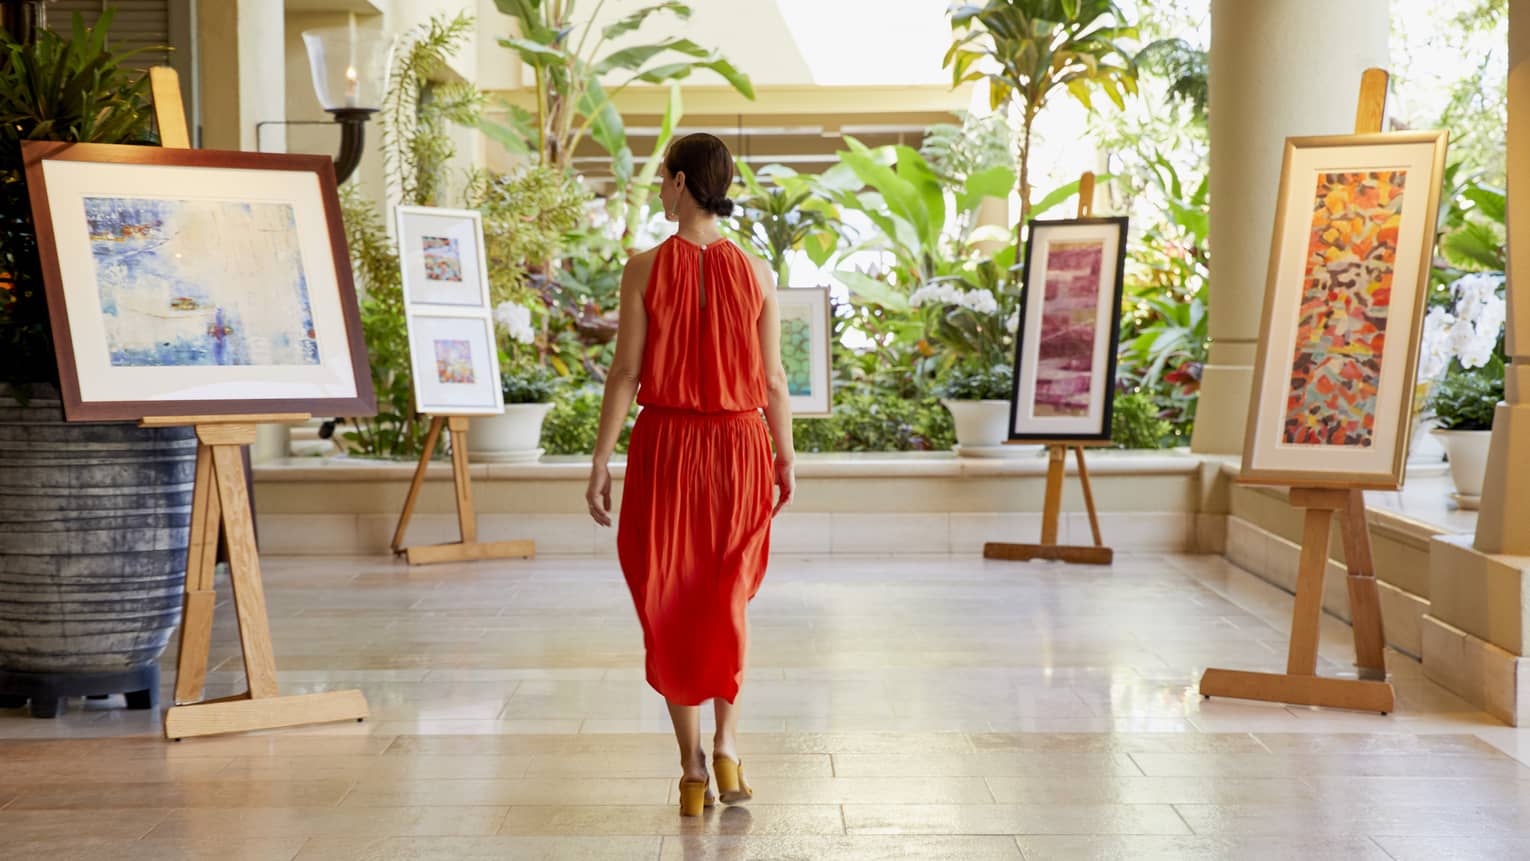 Woman walking through indoor-outdoor room with displayed artwork